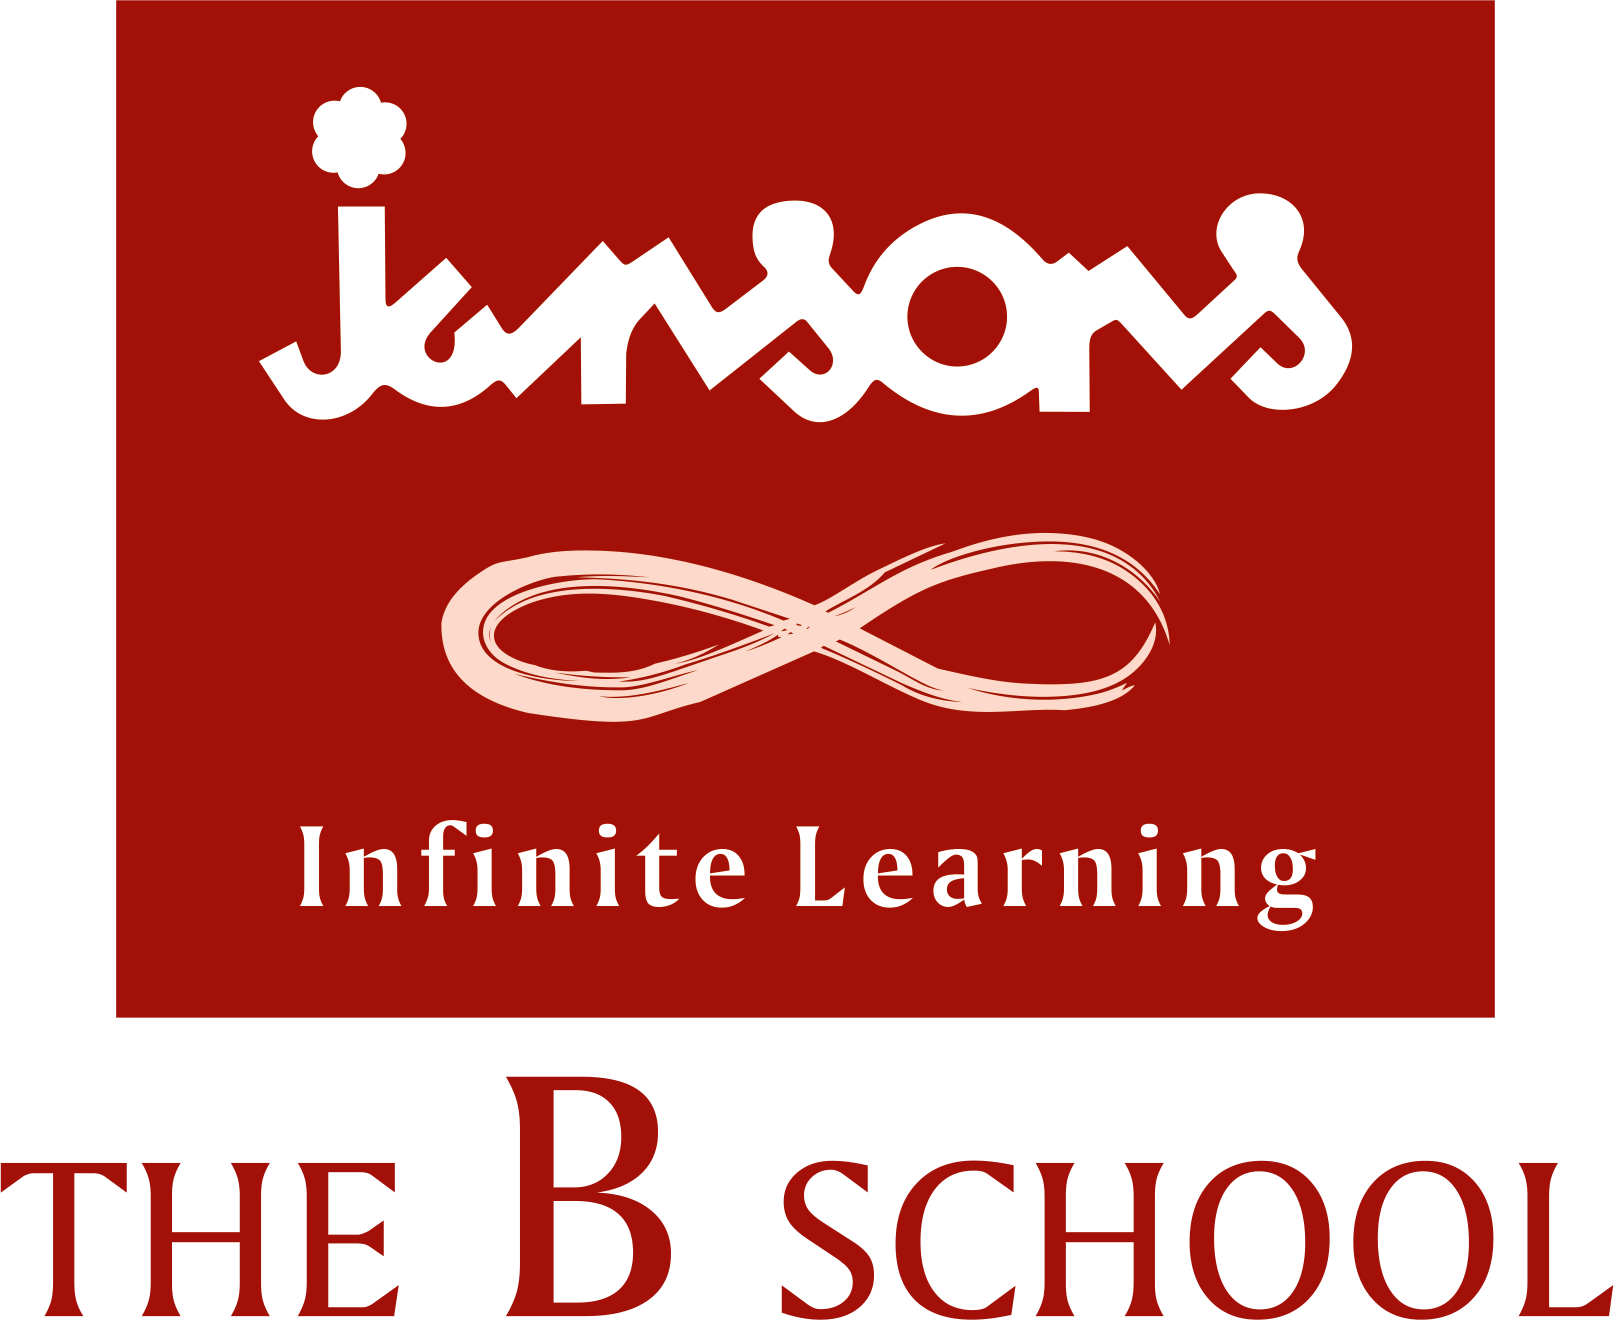 Jansons - Schools of Business